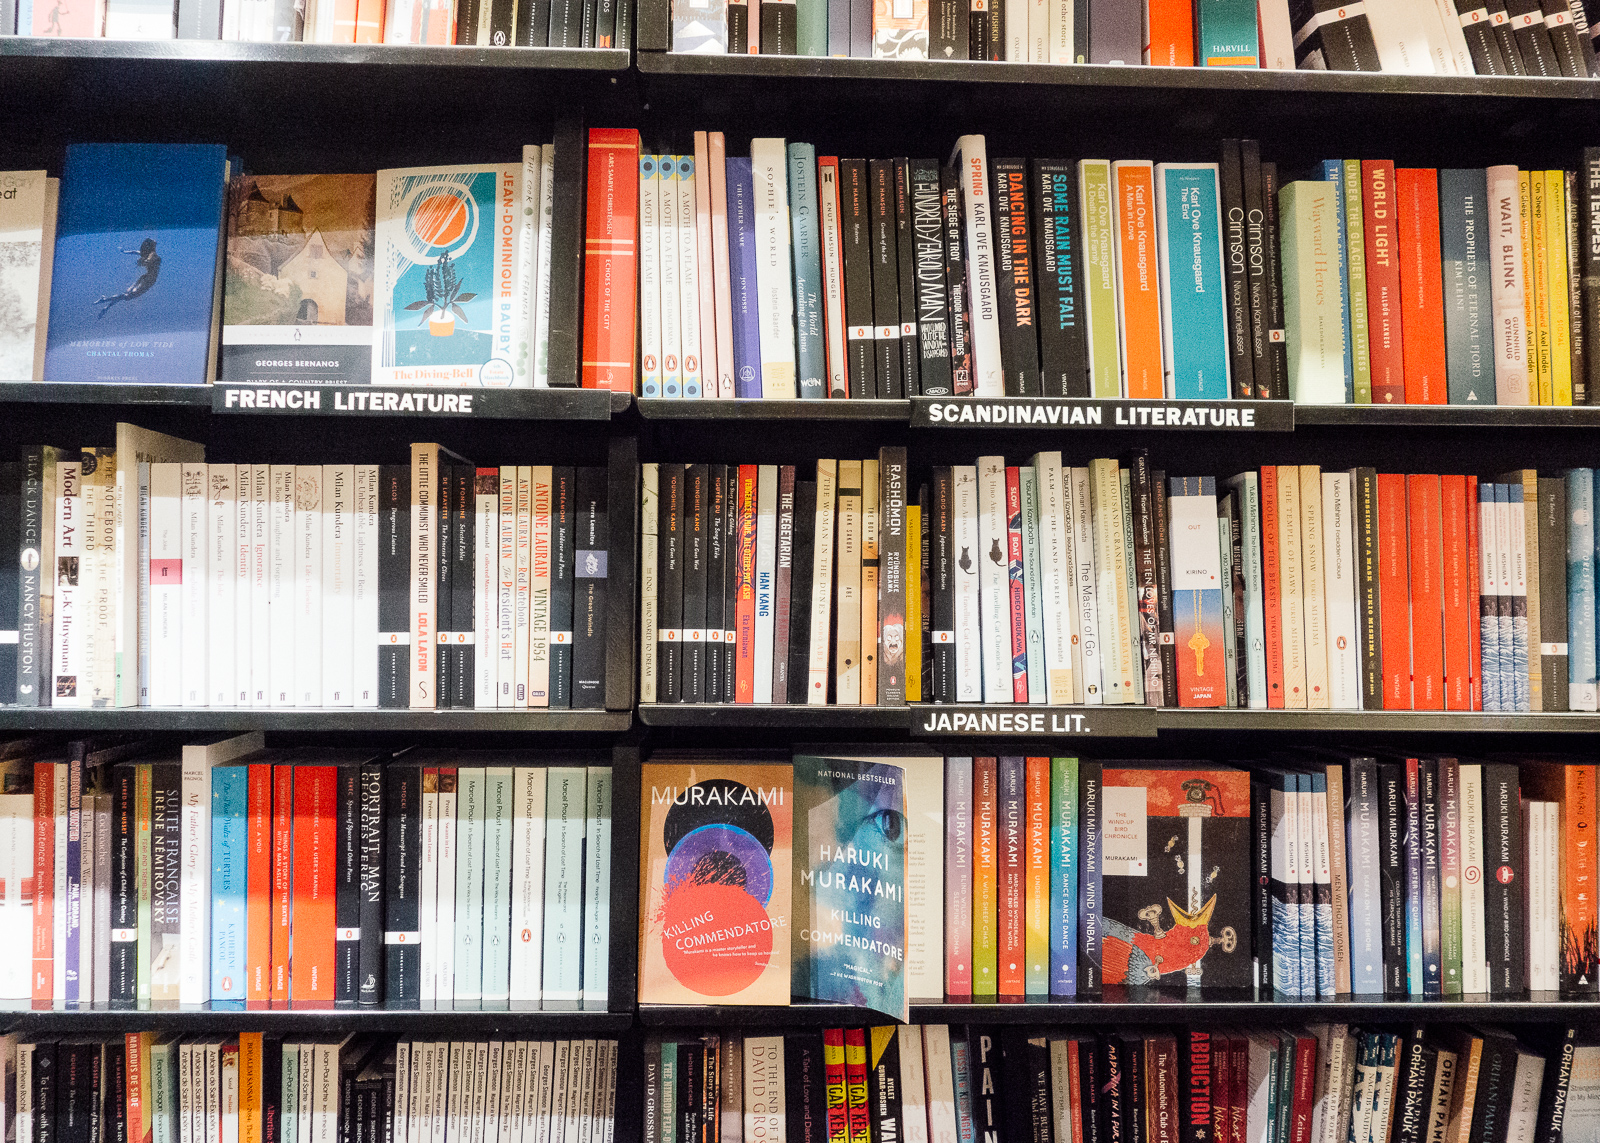 bookshelves stocked with international literature